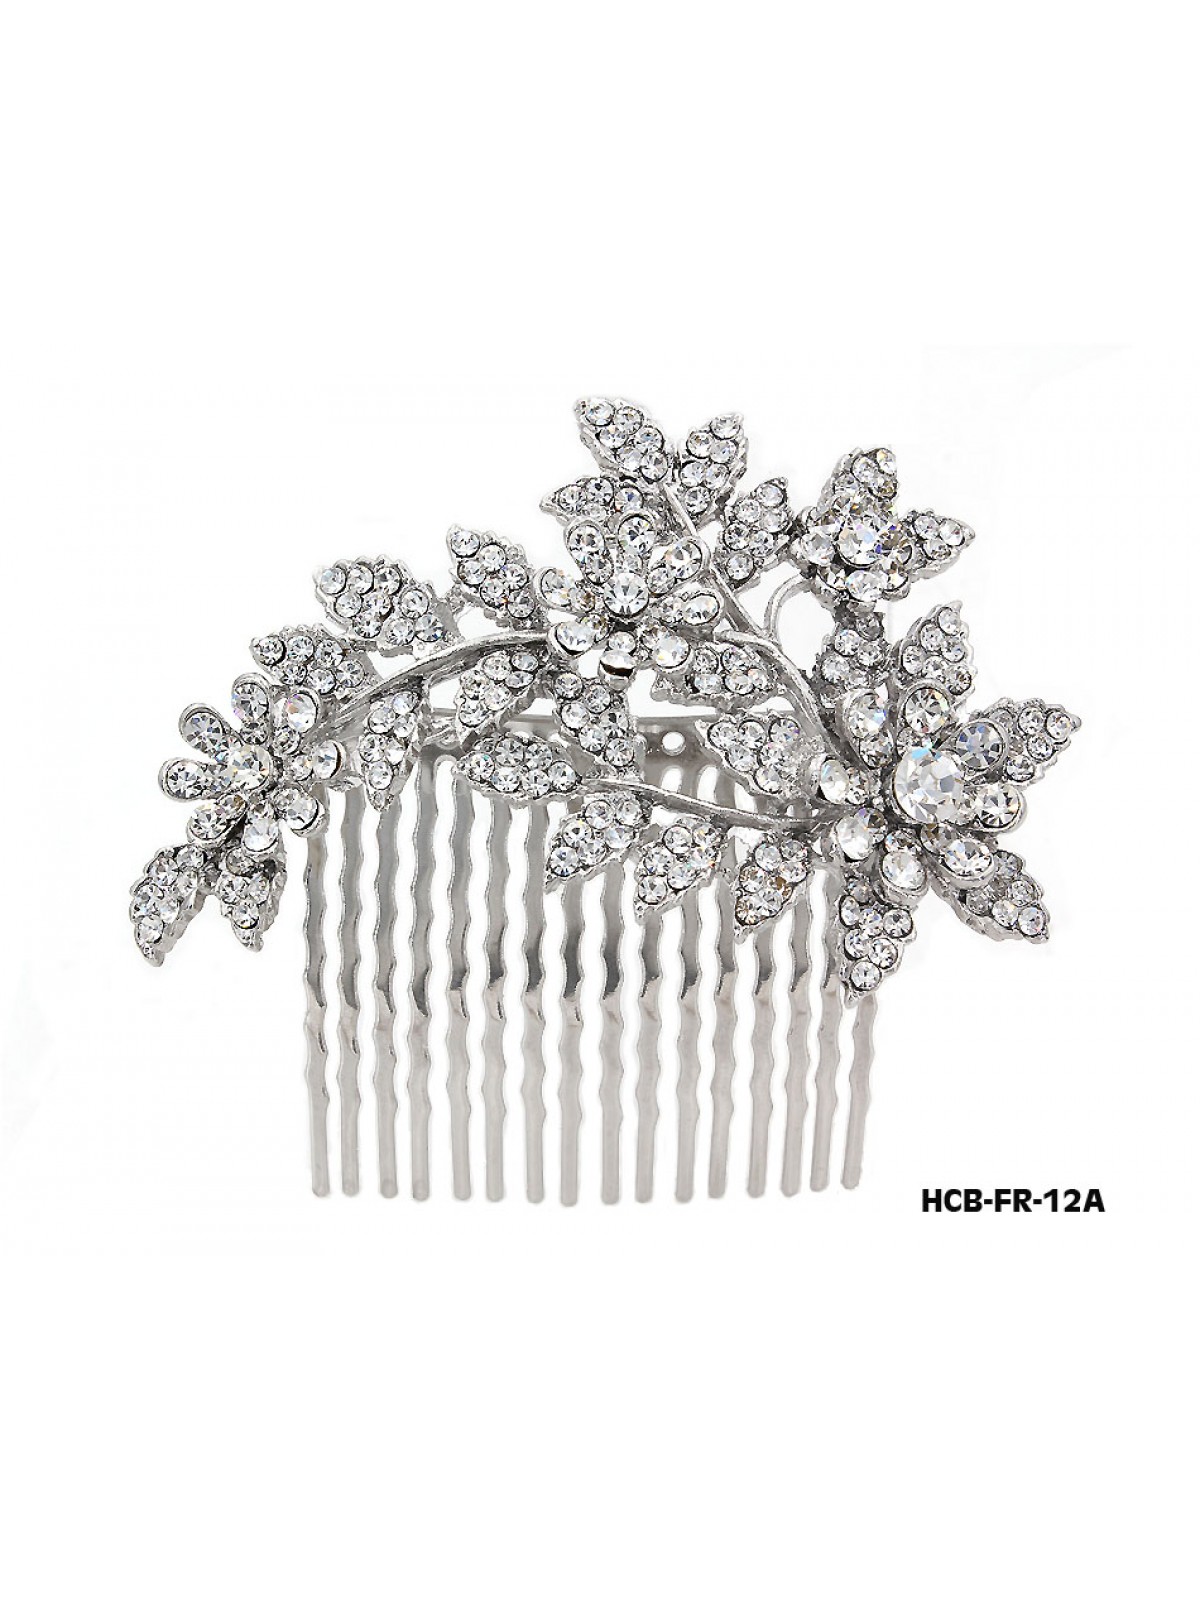 Hair Comb – Bridal Hair Combs & Clips w/ Austrian Crystal Stones Flowers - HCB-FR-12A